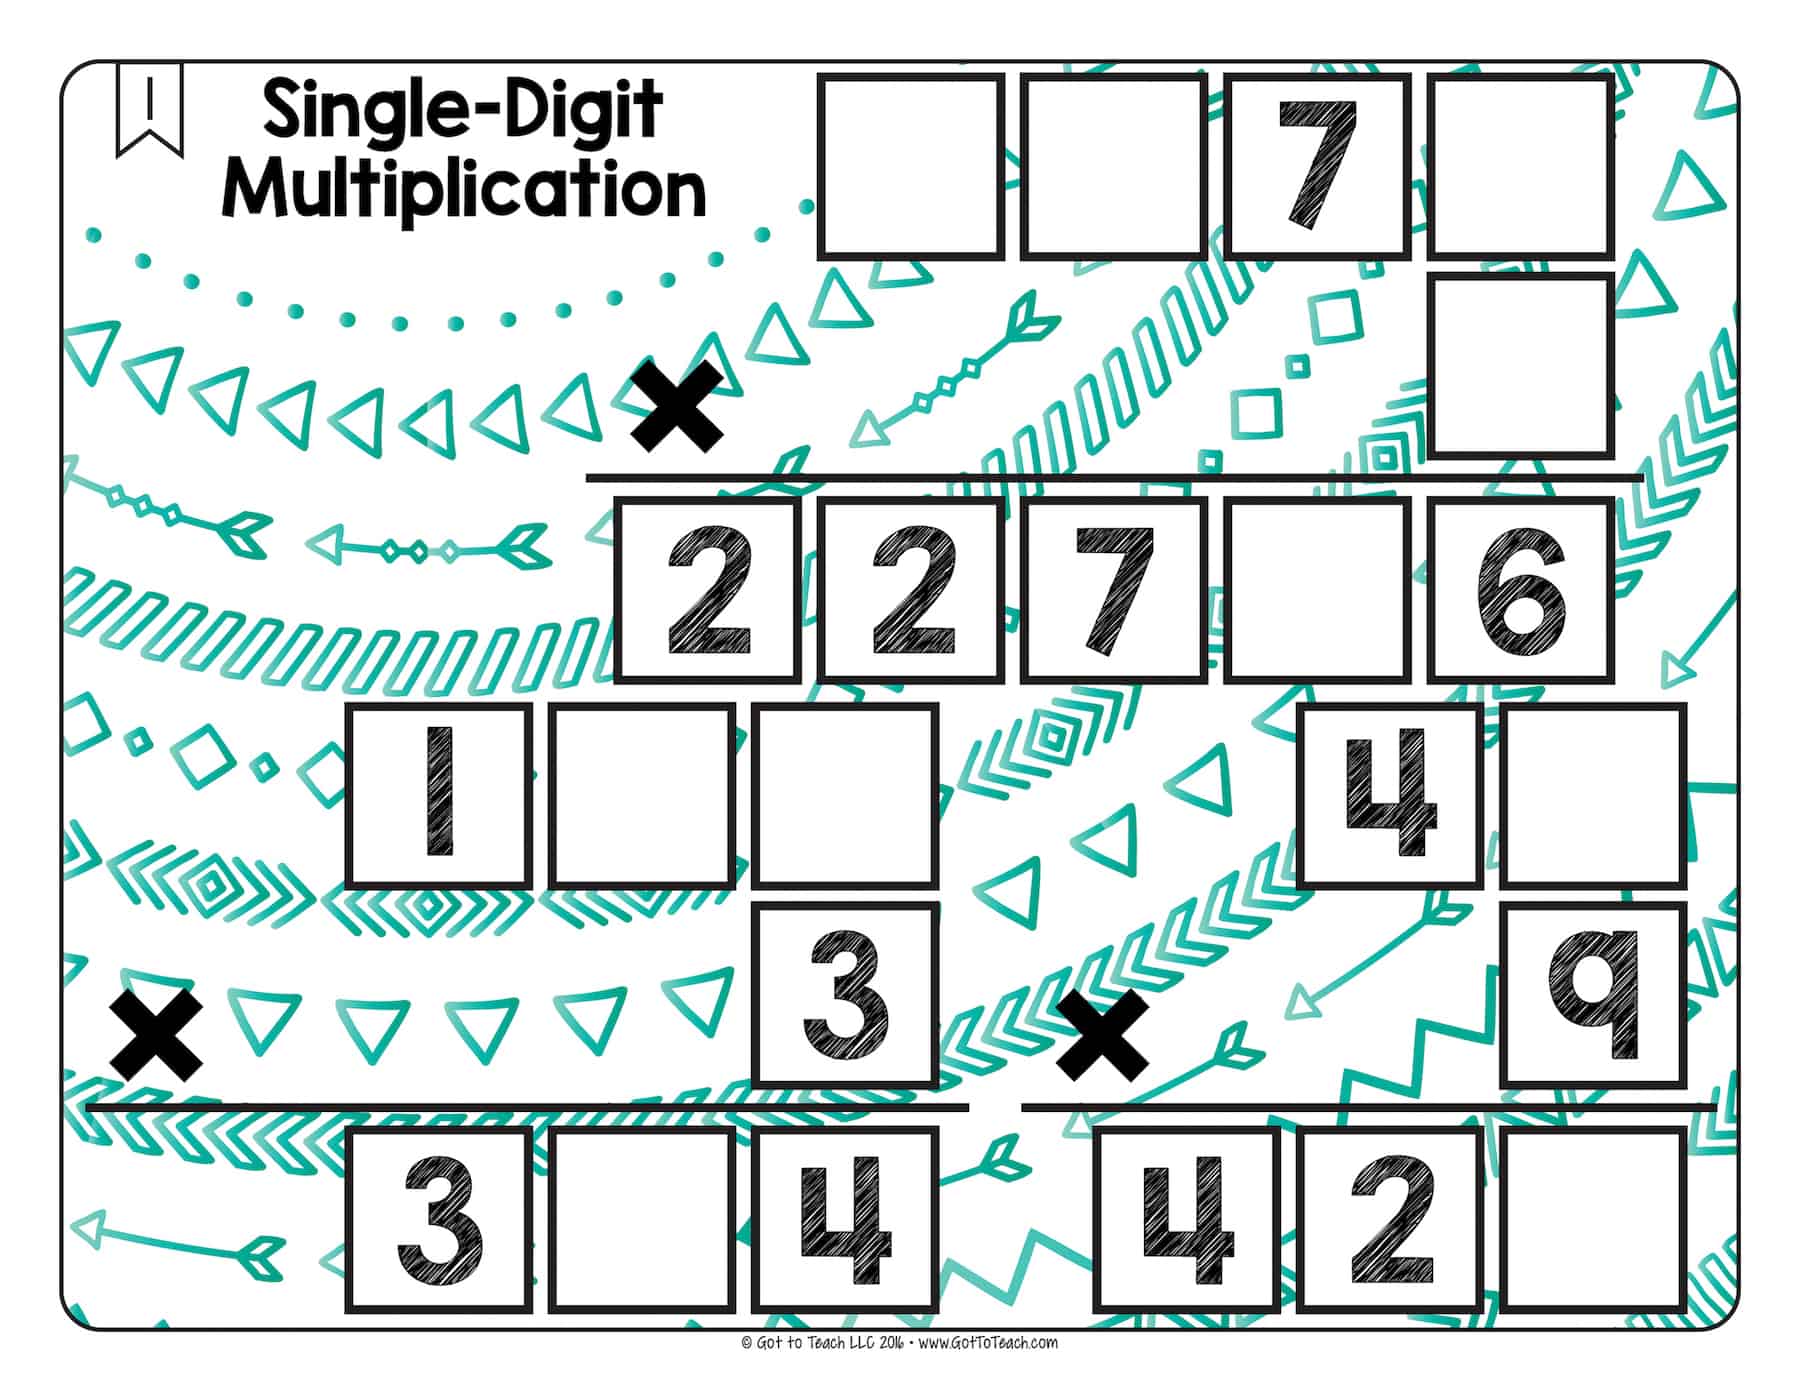 Single-Digit Multiplication